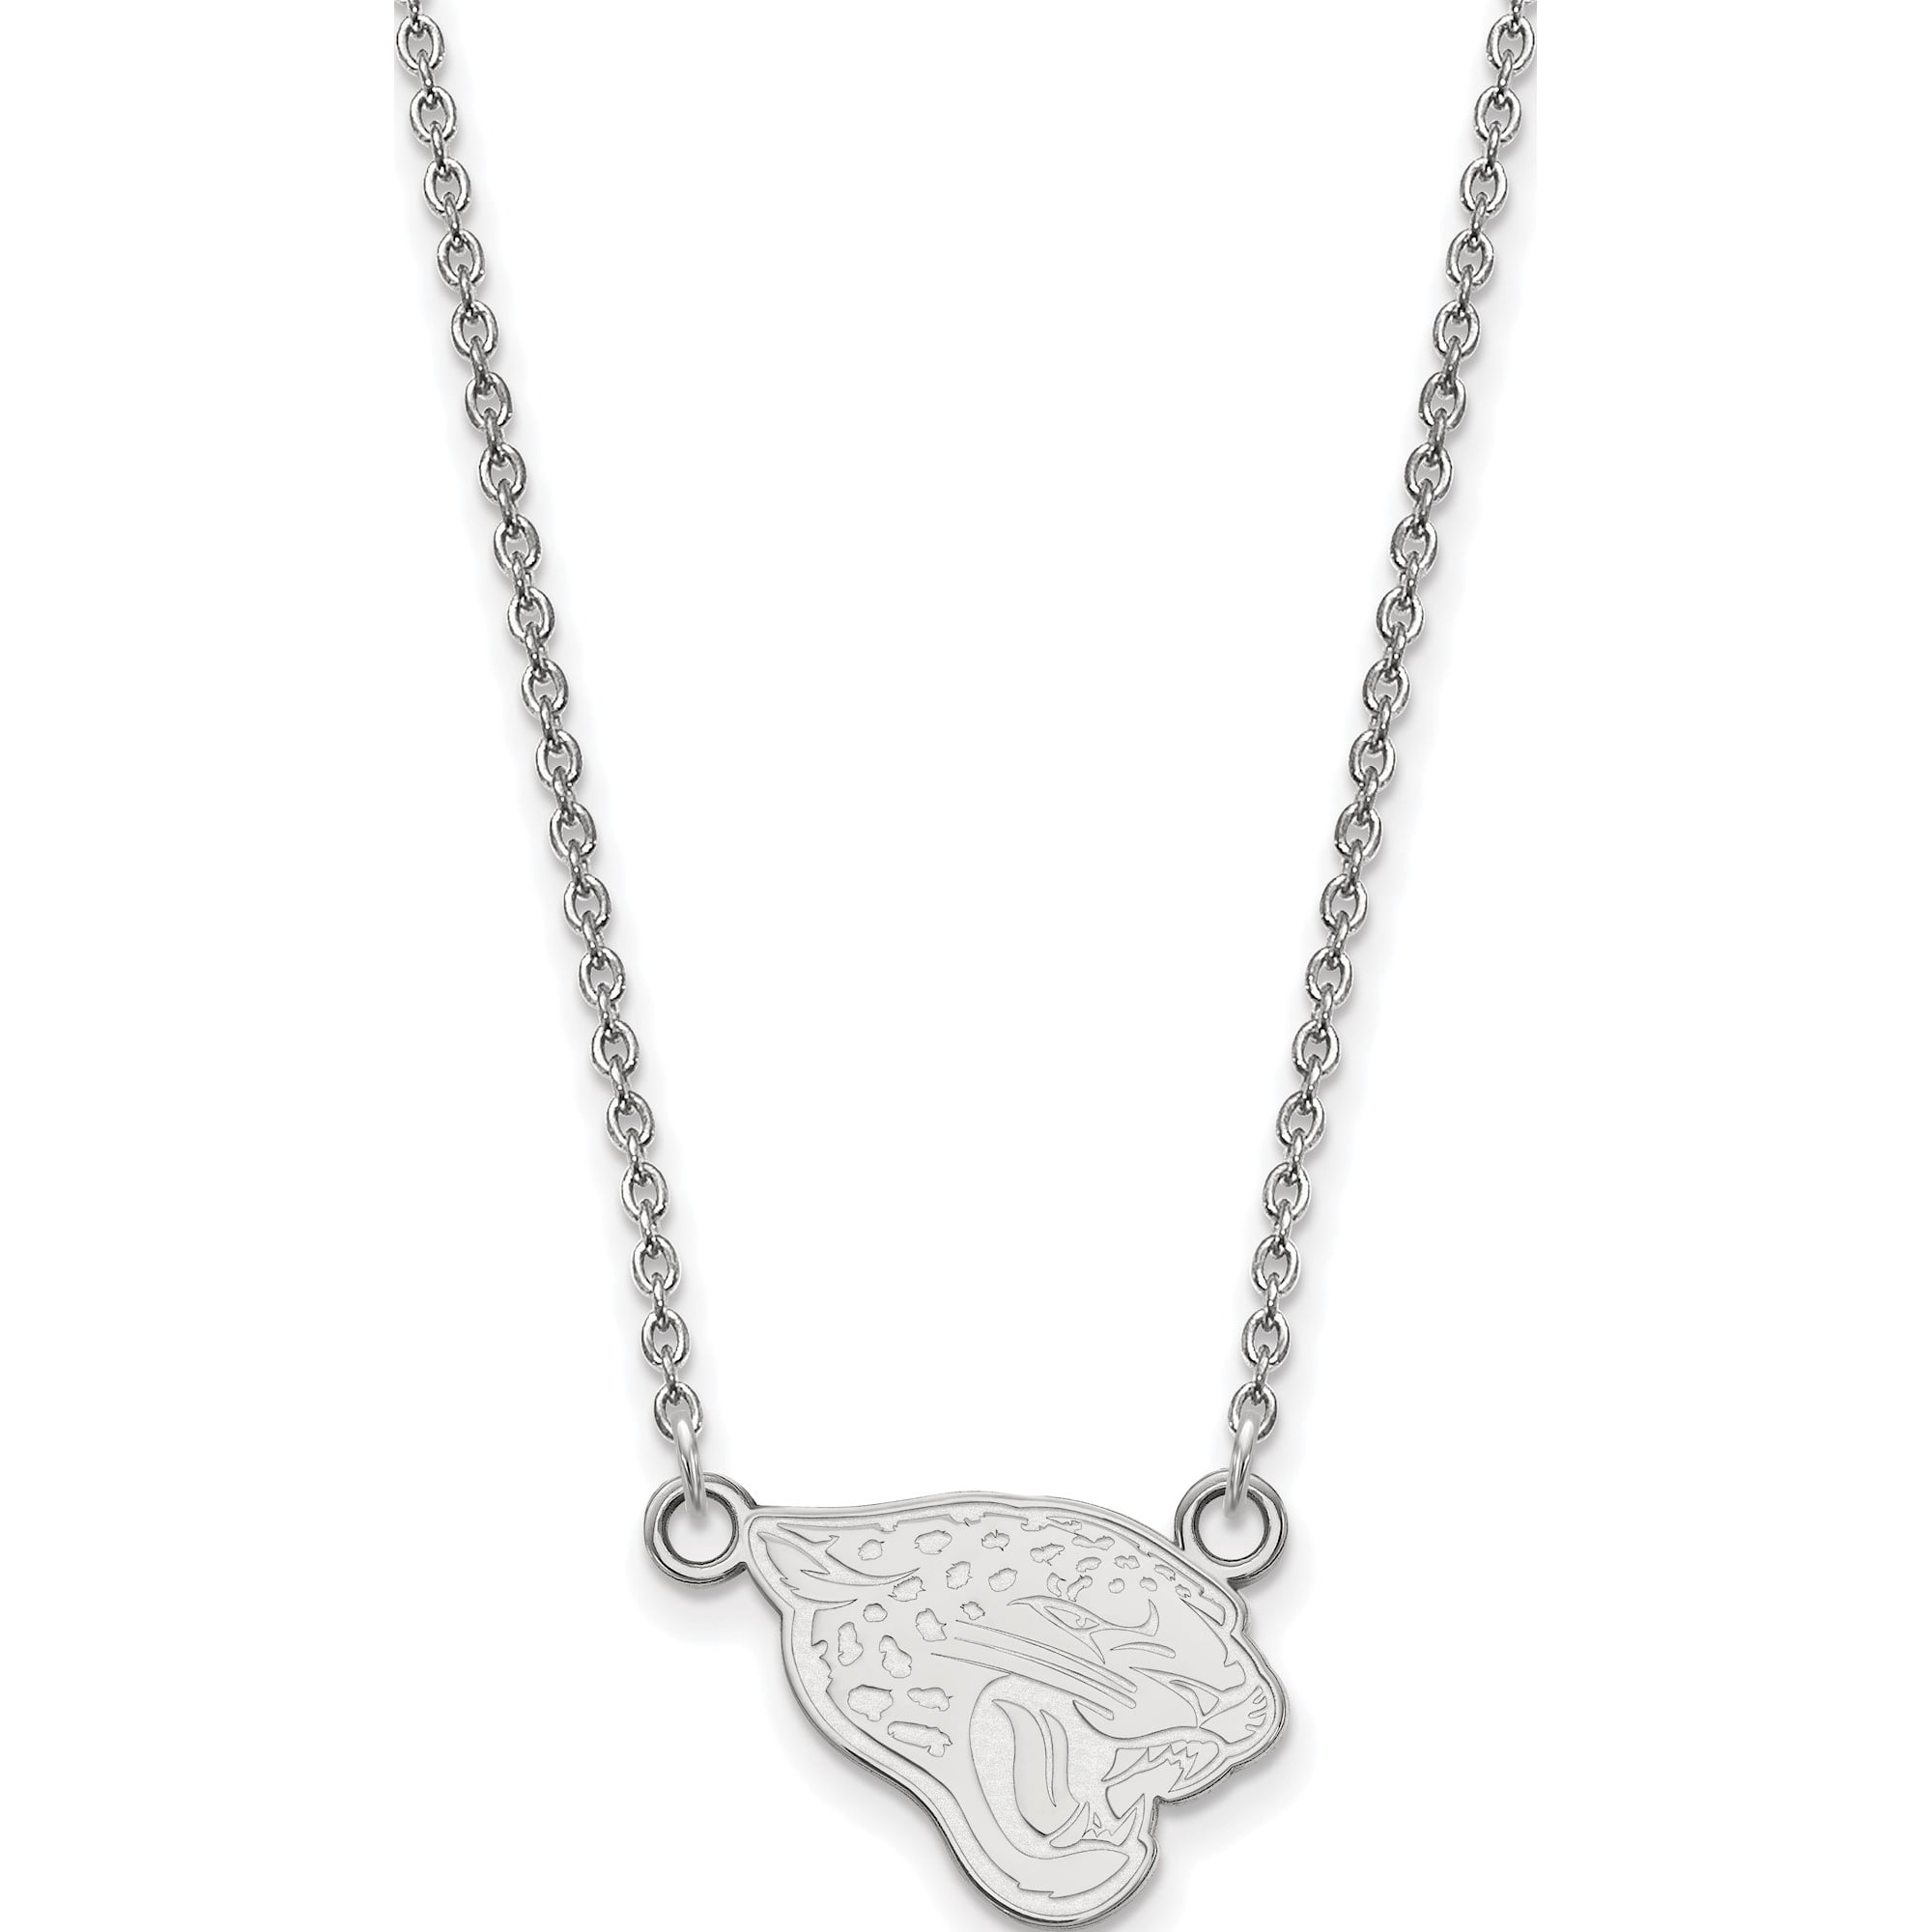 jacksonville jaguars necklace